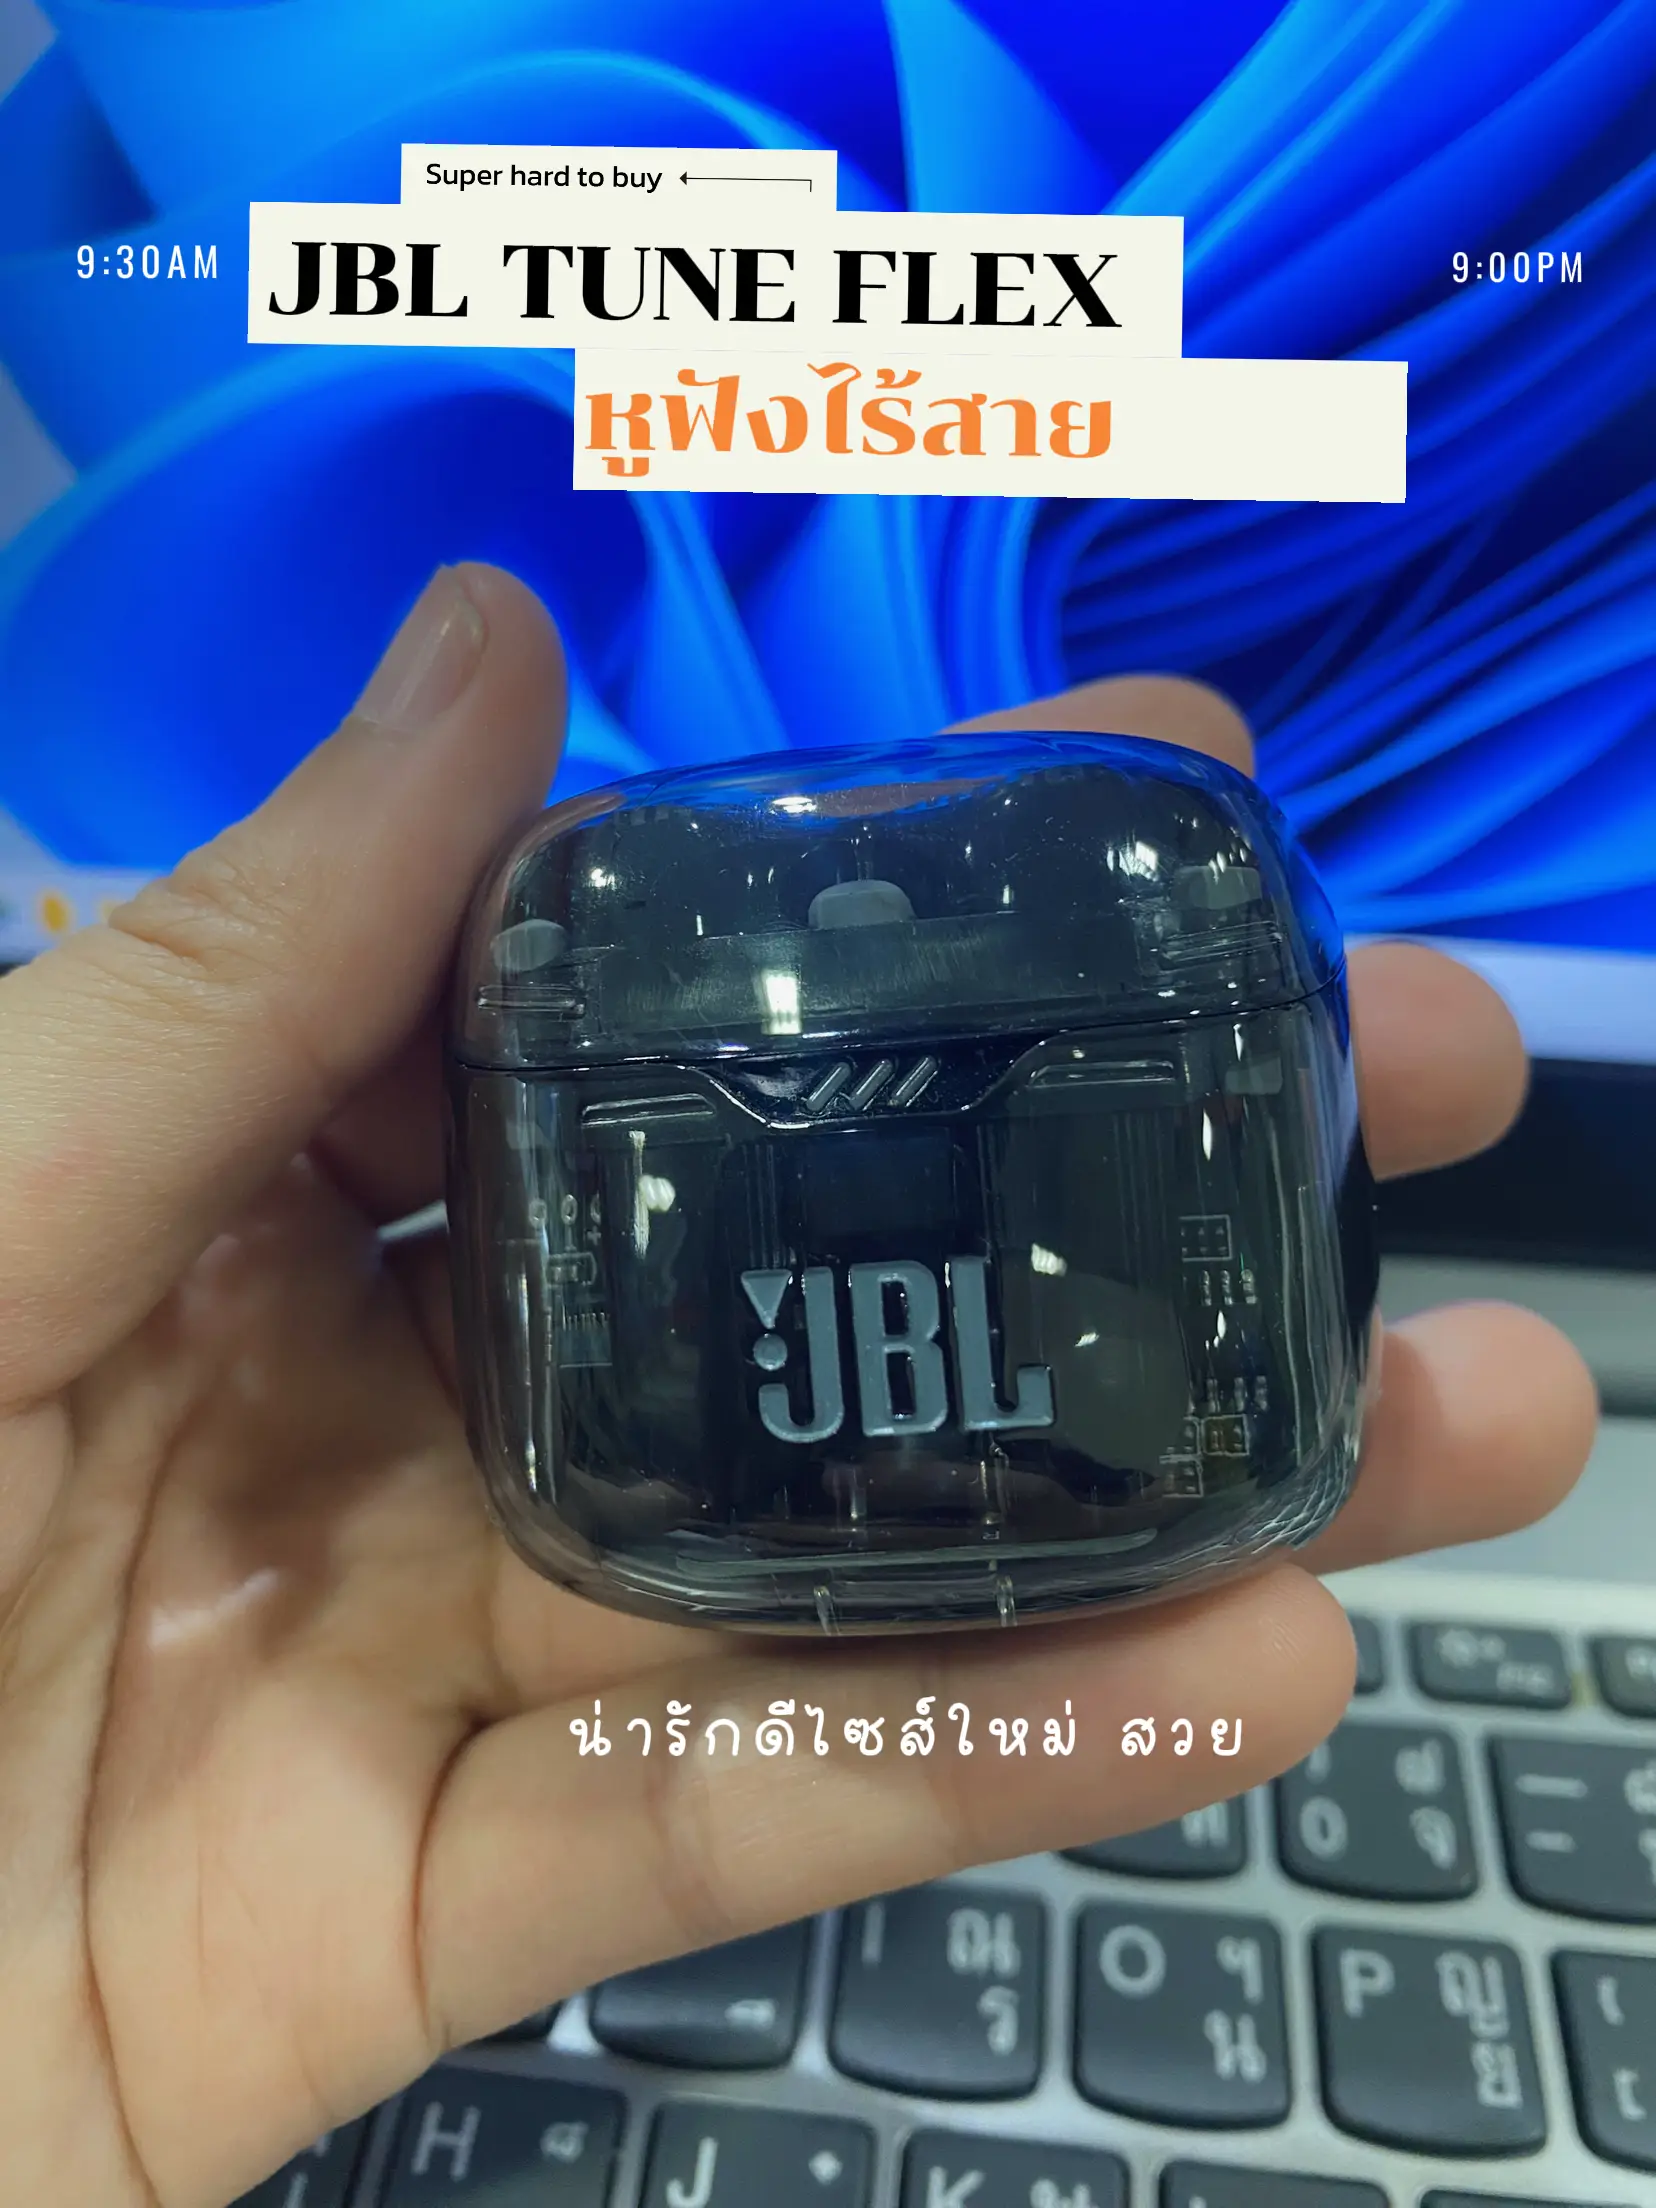 JBL TUNE FLEX Wireless Headphones, Gallery posted by ♥ ℕ'ℙ𝕆𝕐 ♥